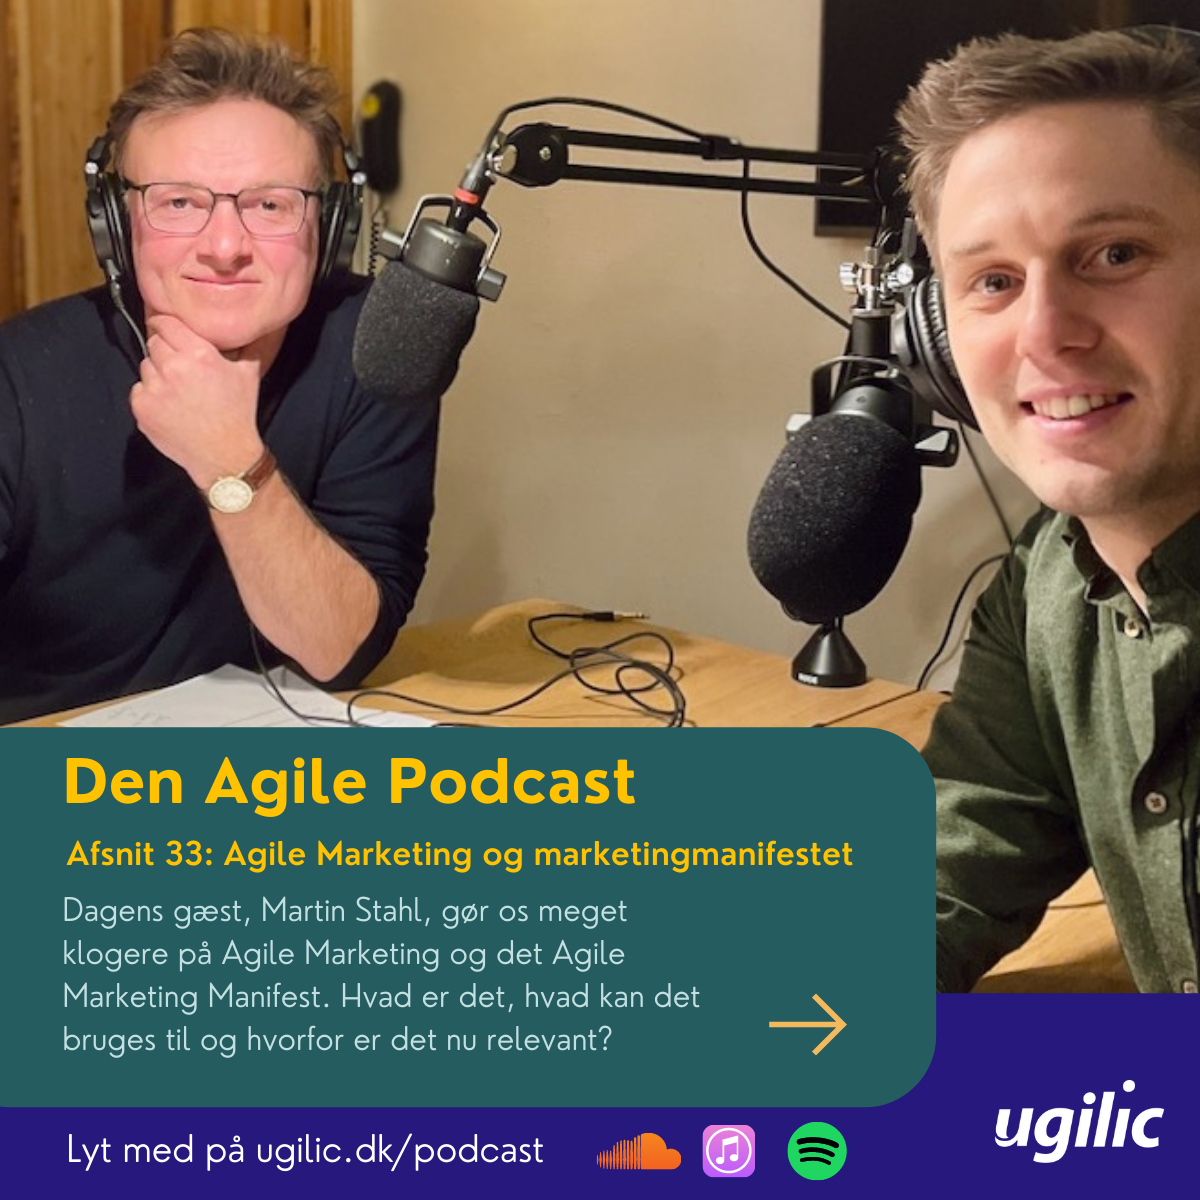 Lyt til Den Agile Podcast nr 33 Agile marketing og marketingmaifest